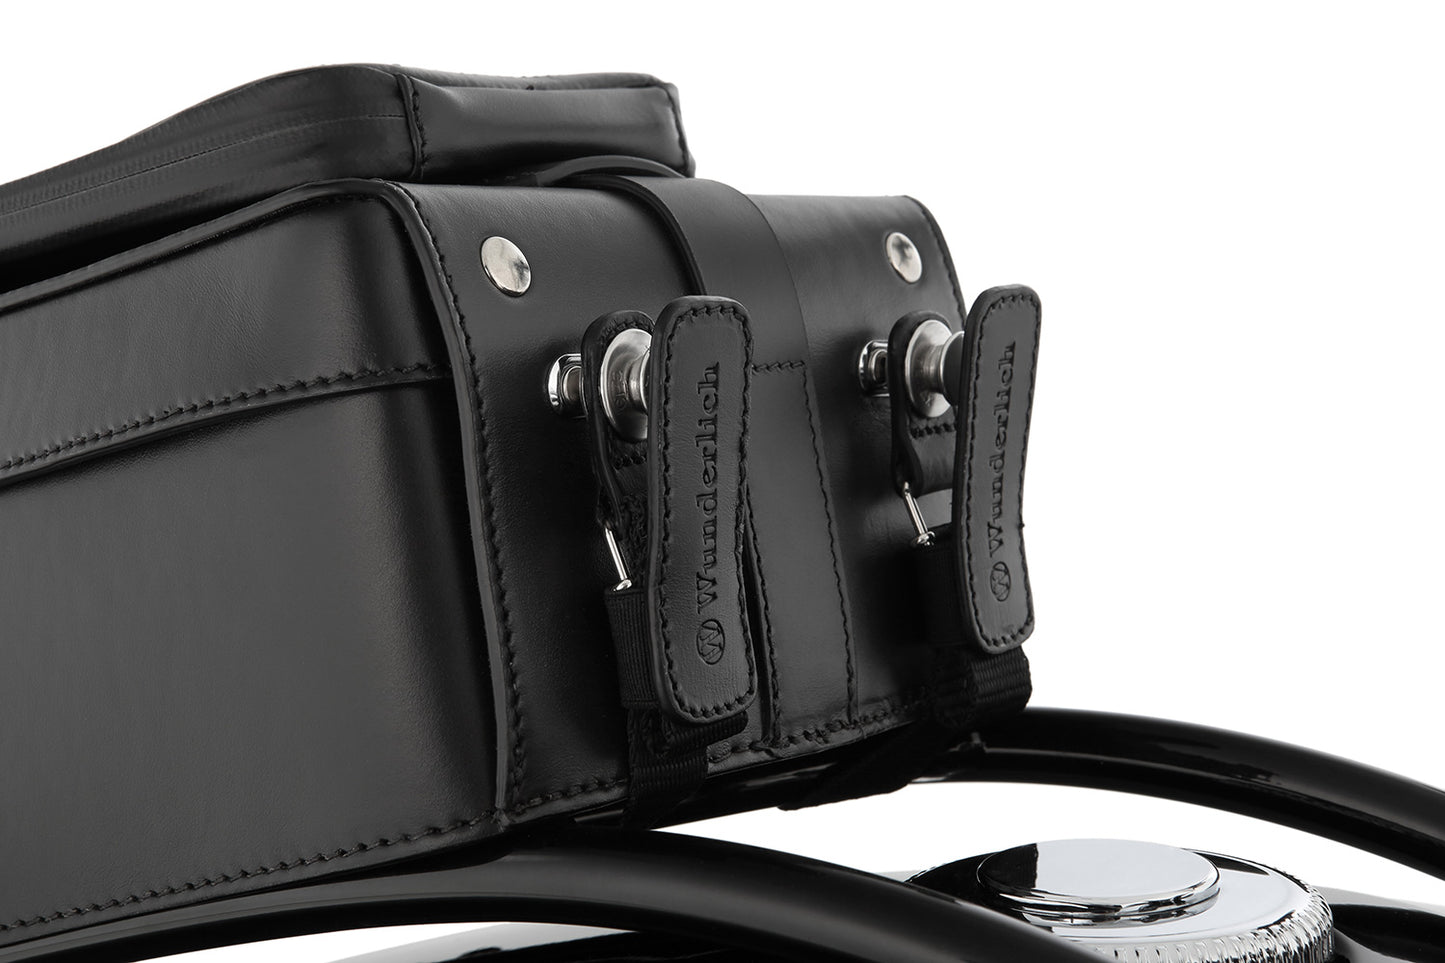 Wunderlich leather bag set »CLASSIC« for tank rails - black